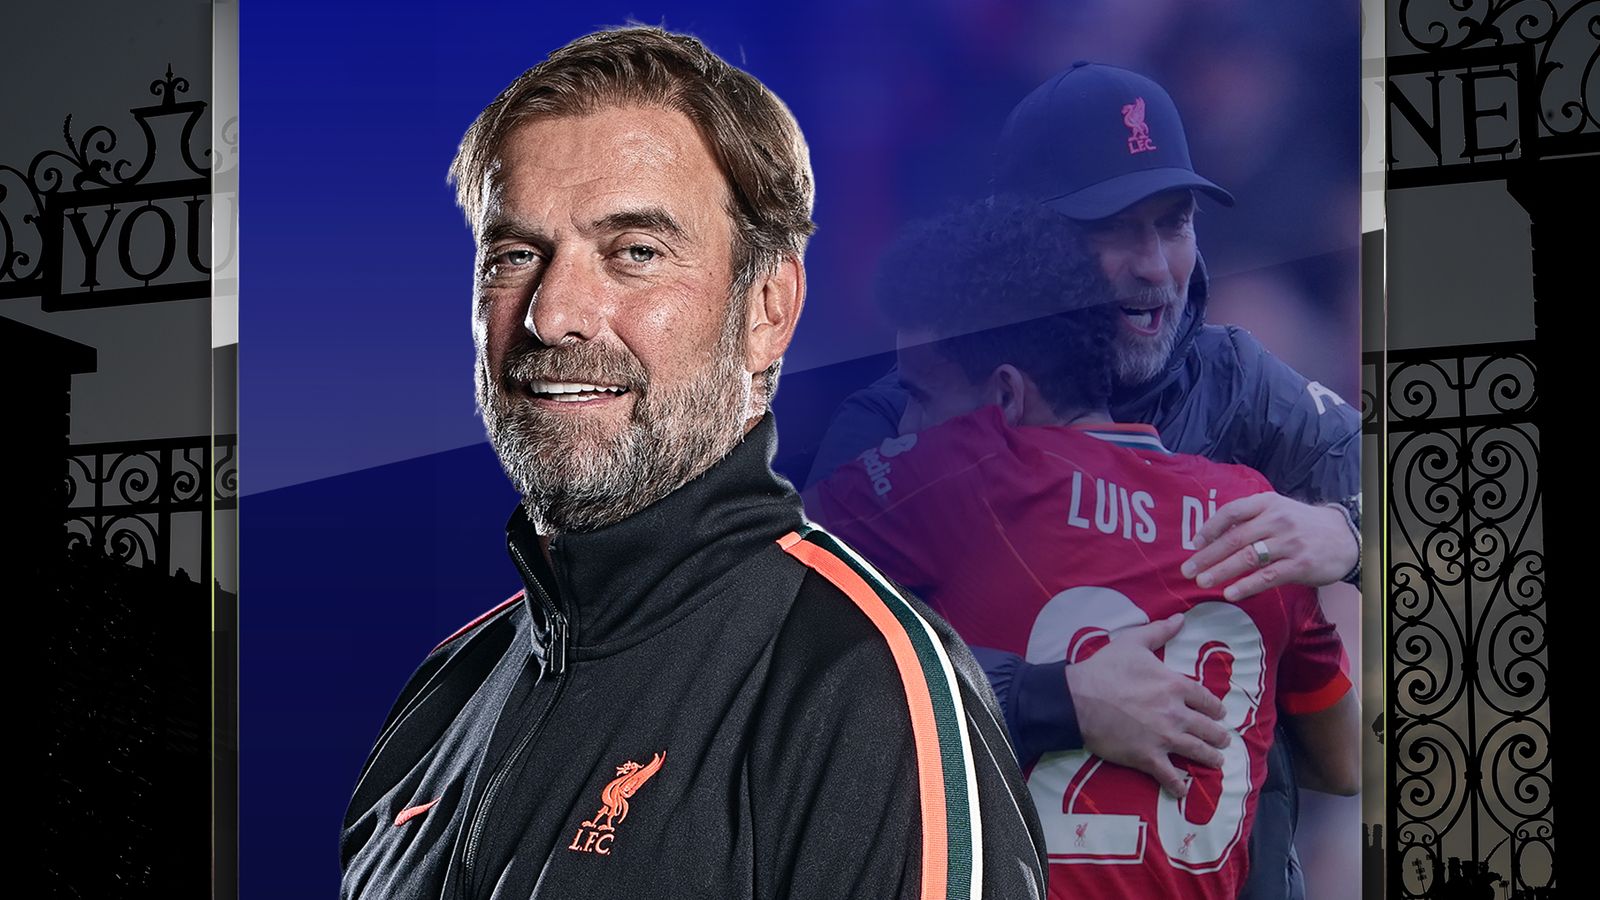 Jurgen Klopp exceptional job interview: Luis Diaz’s influence at Liverpool stated | Soccer News